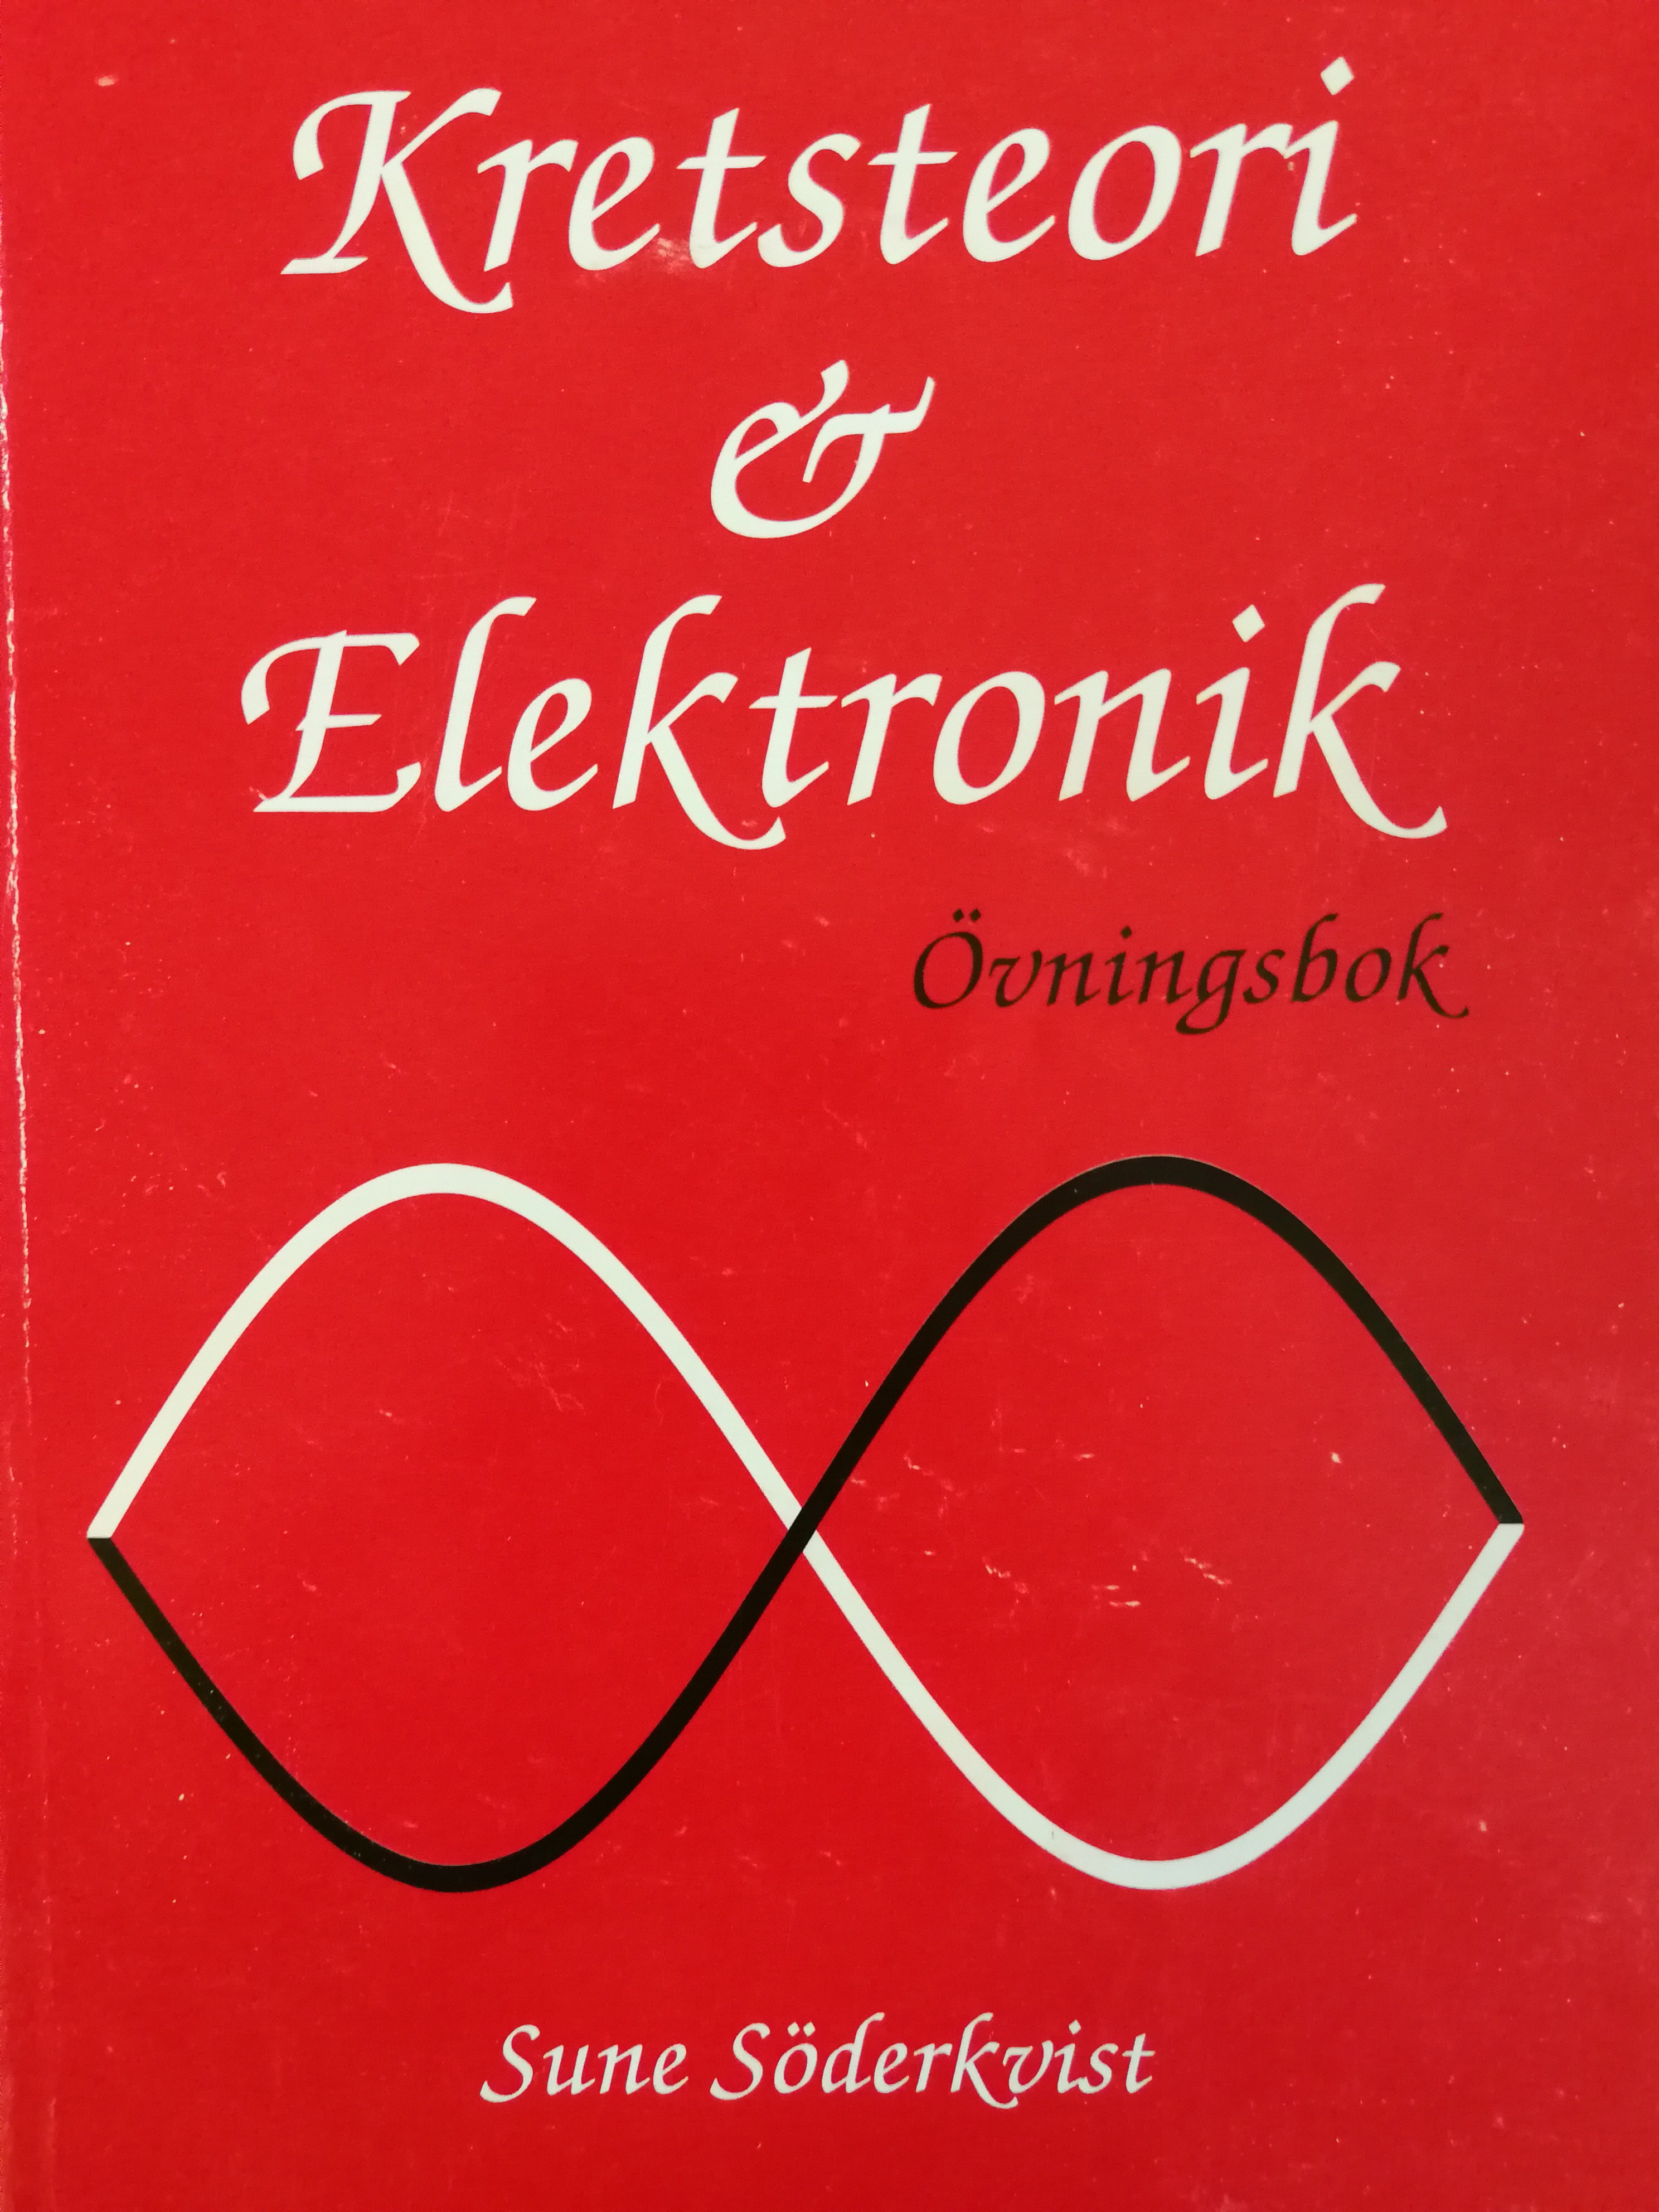 Kretsteori & Elektronik Övningsbok; Sune Söderkvist; 0